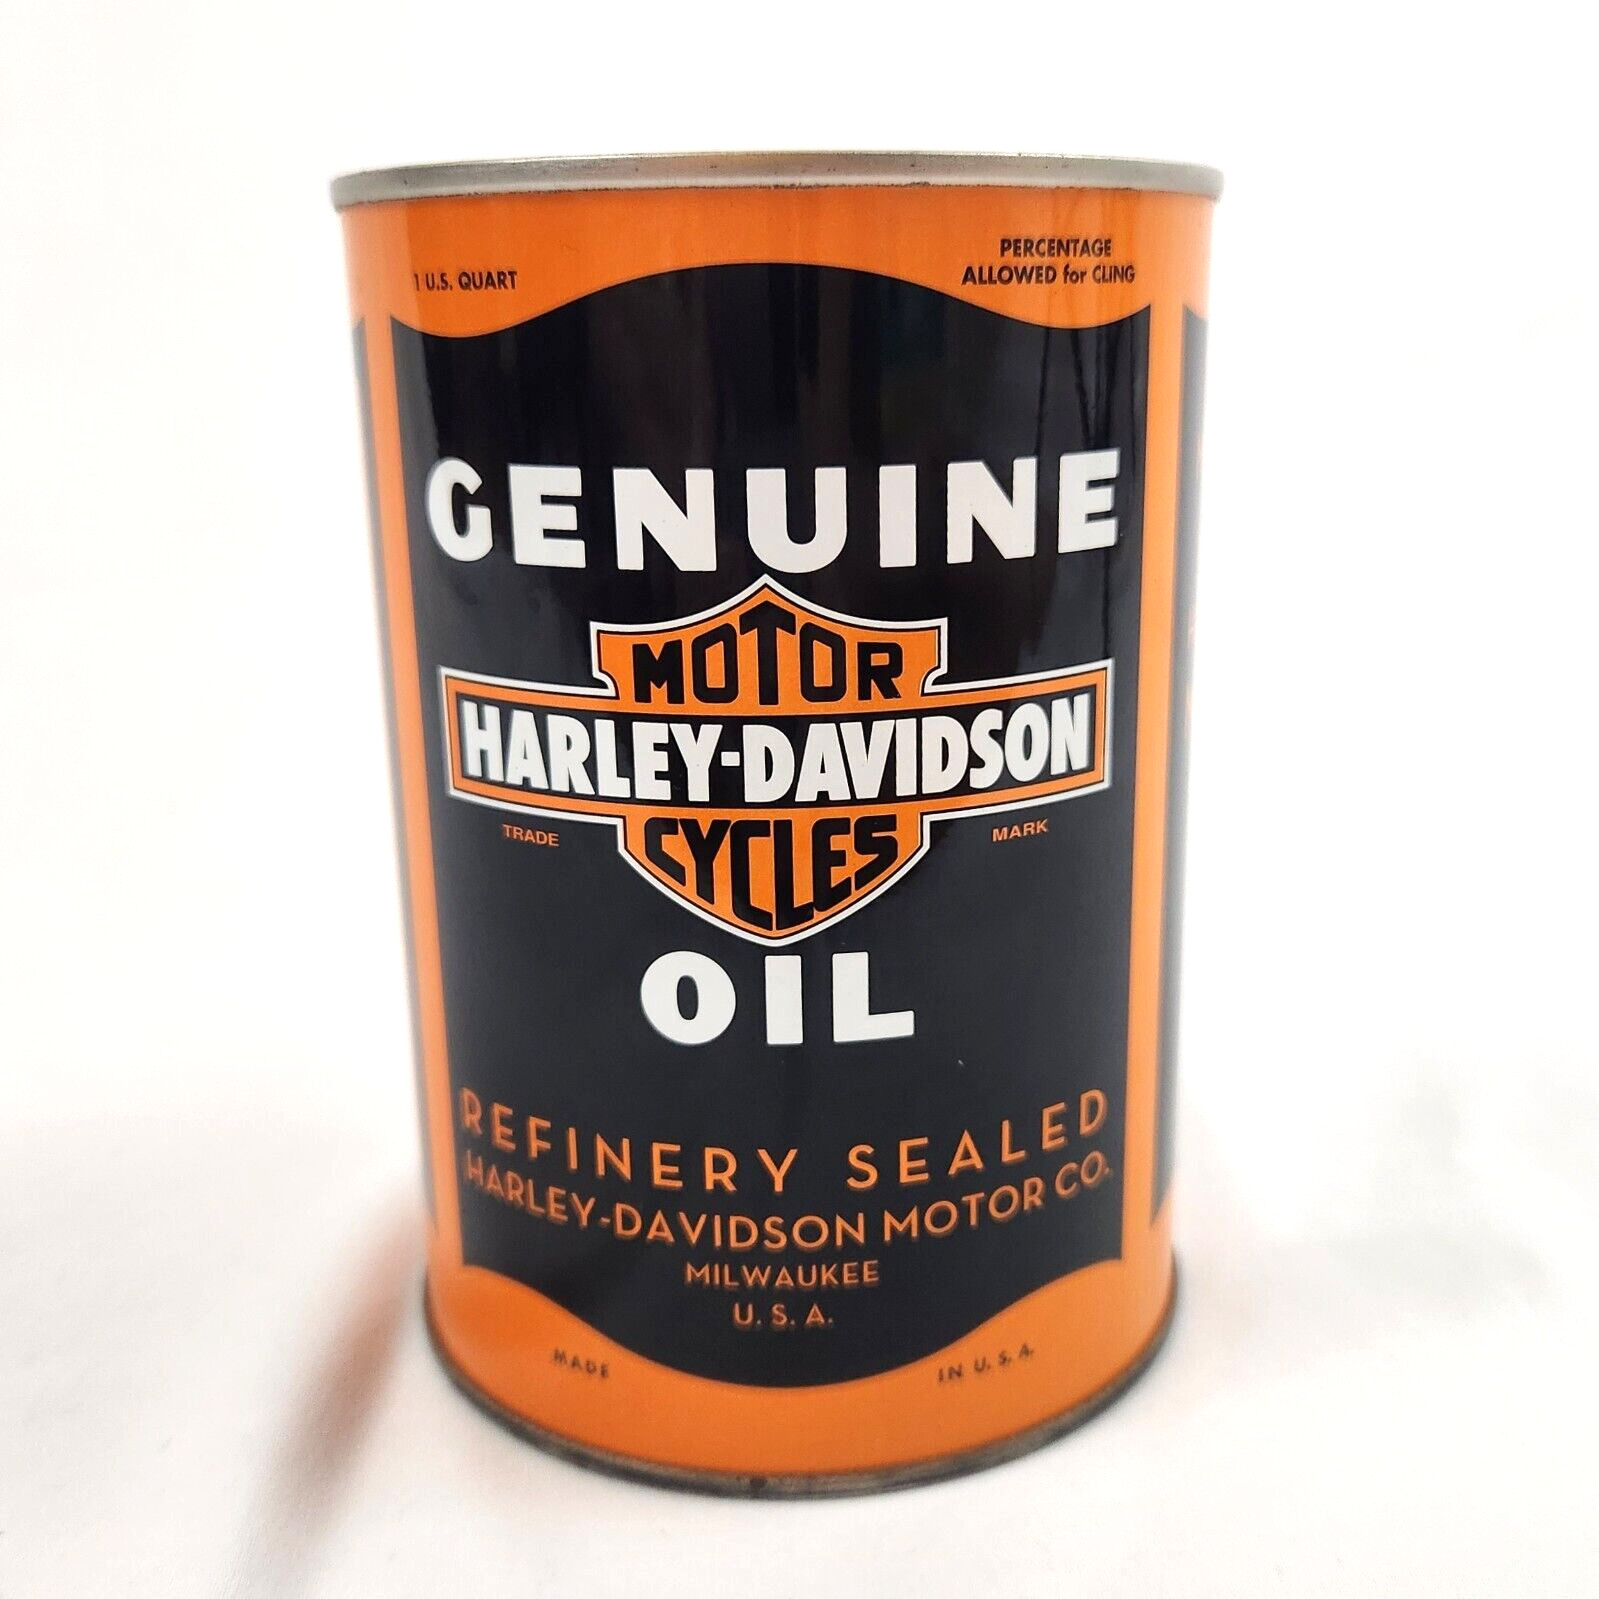 Vintage Harley Davidson Genuine Motor Oil Can 1 Quart Full Ltd. Edition 20W-50